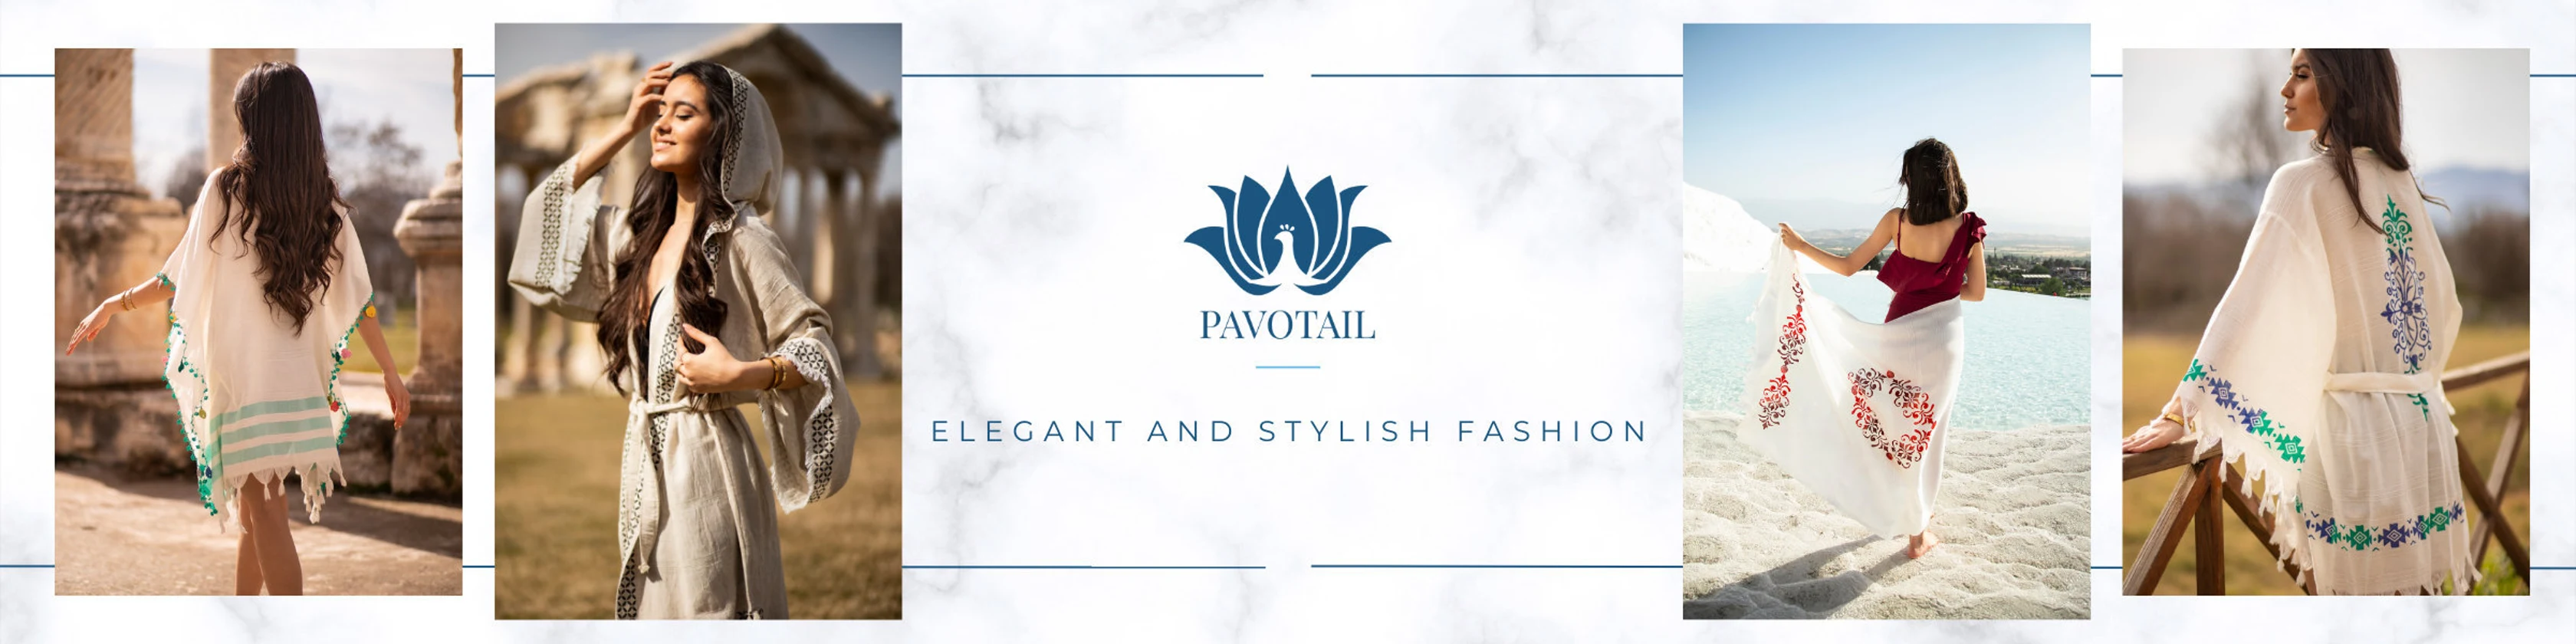 Pavotail Elegant and Stylish Fashion